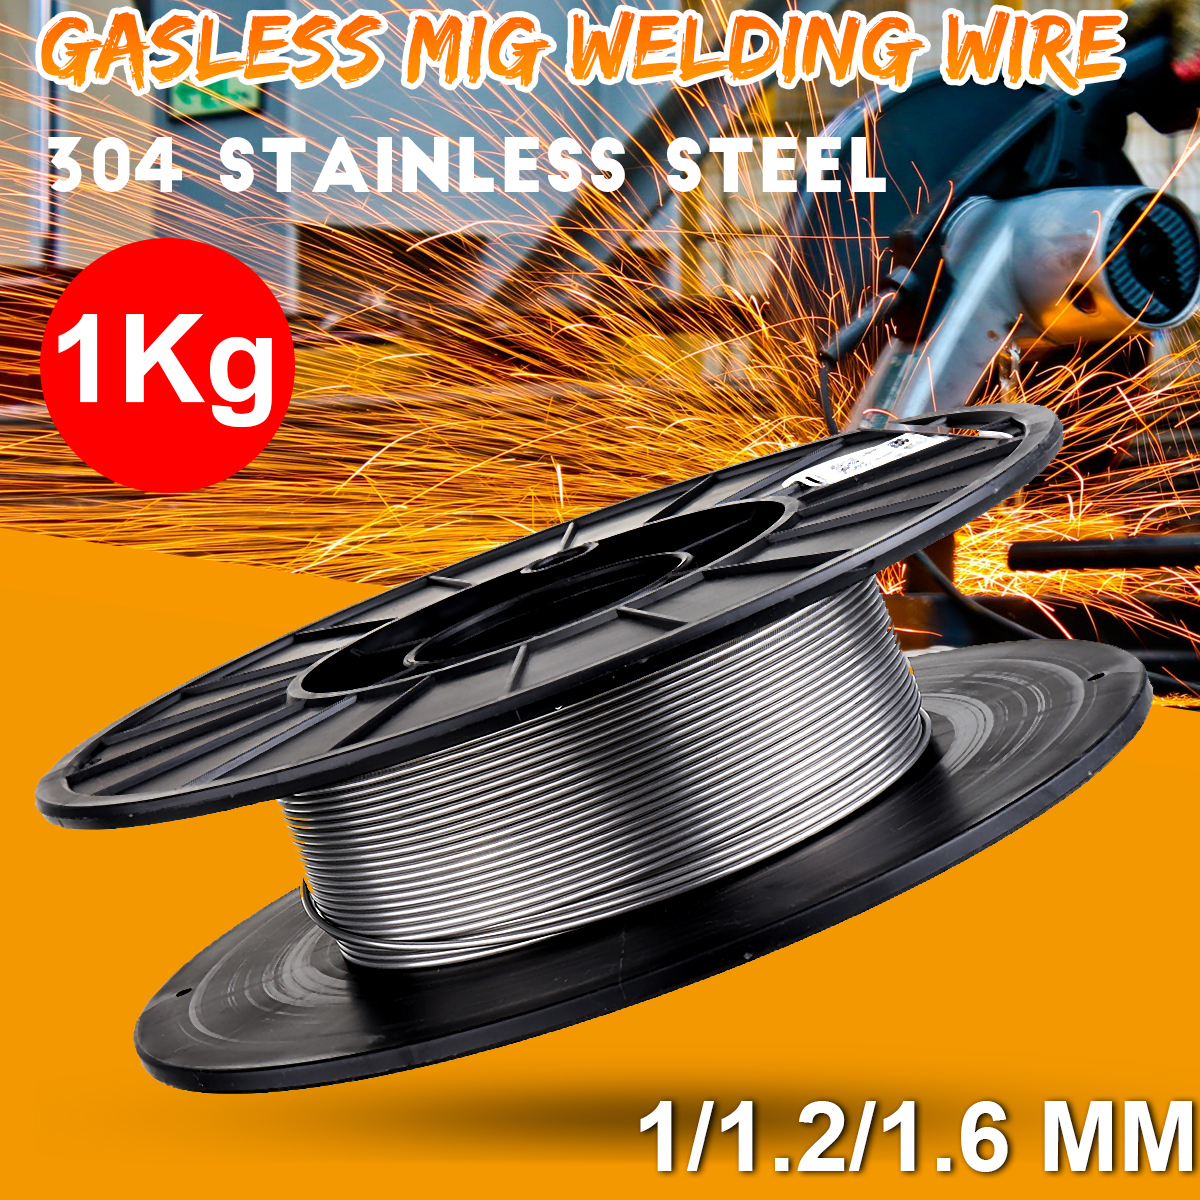 101216mm-1kg-Stainless-Steel-Gas-Mig-Solder-Welding-Wire-Self-shielded-Tool-1565887-1